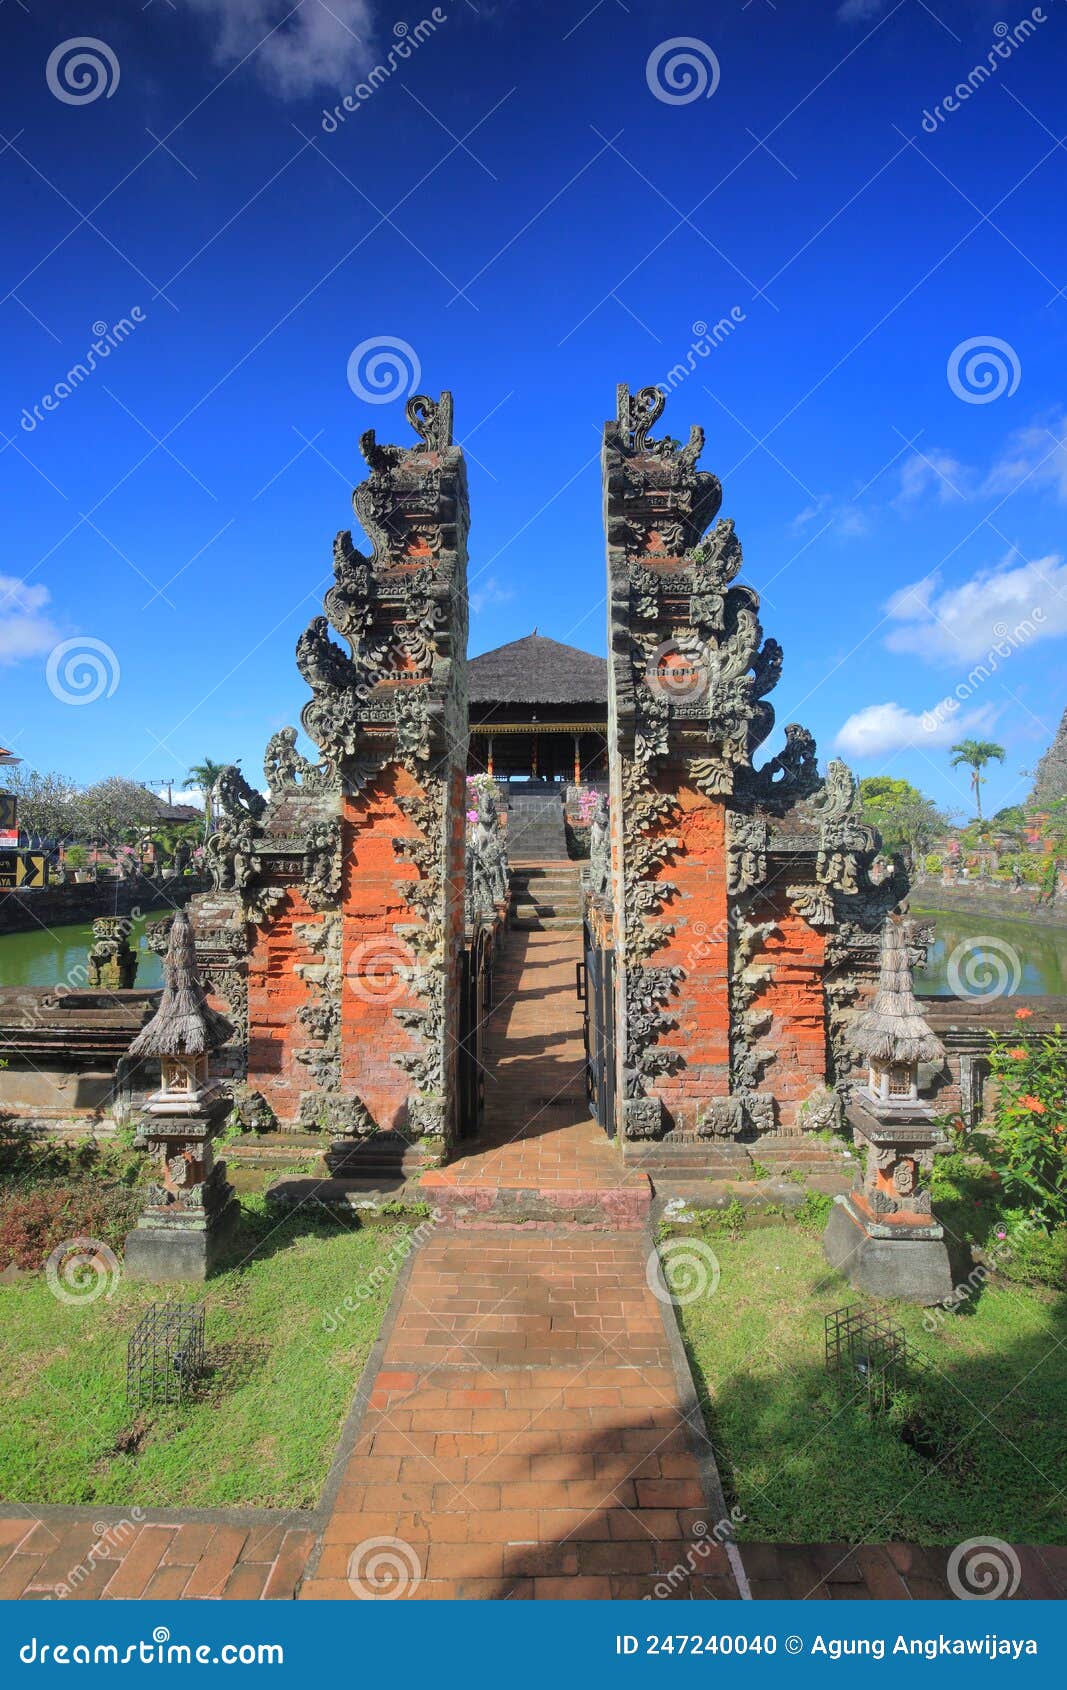 kertha gosa pavilion klungkung palace bali indonesia